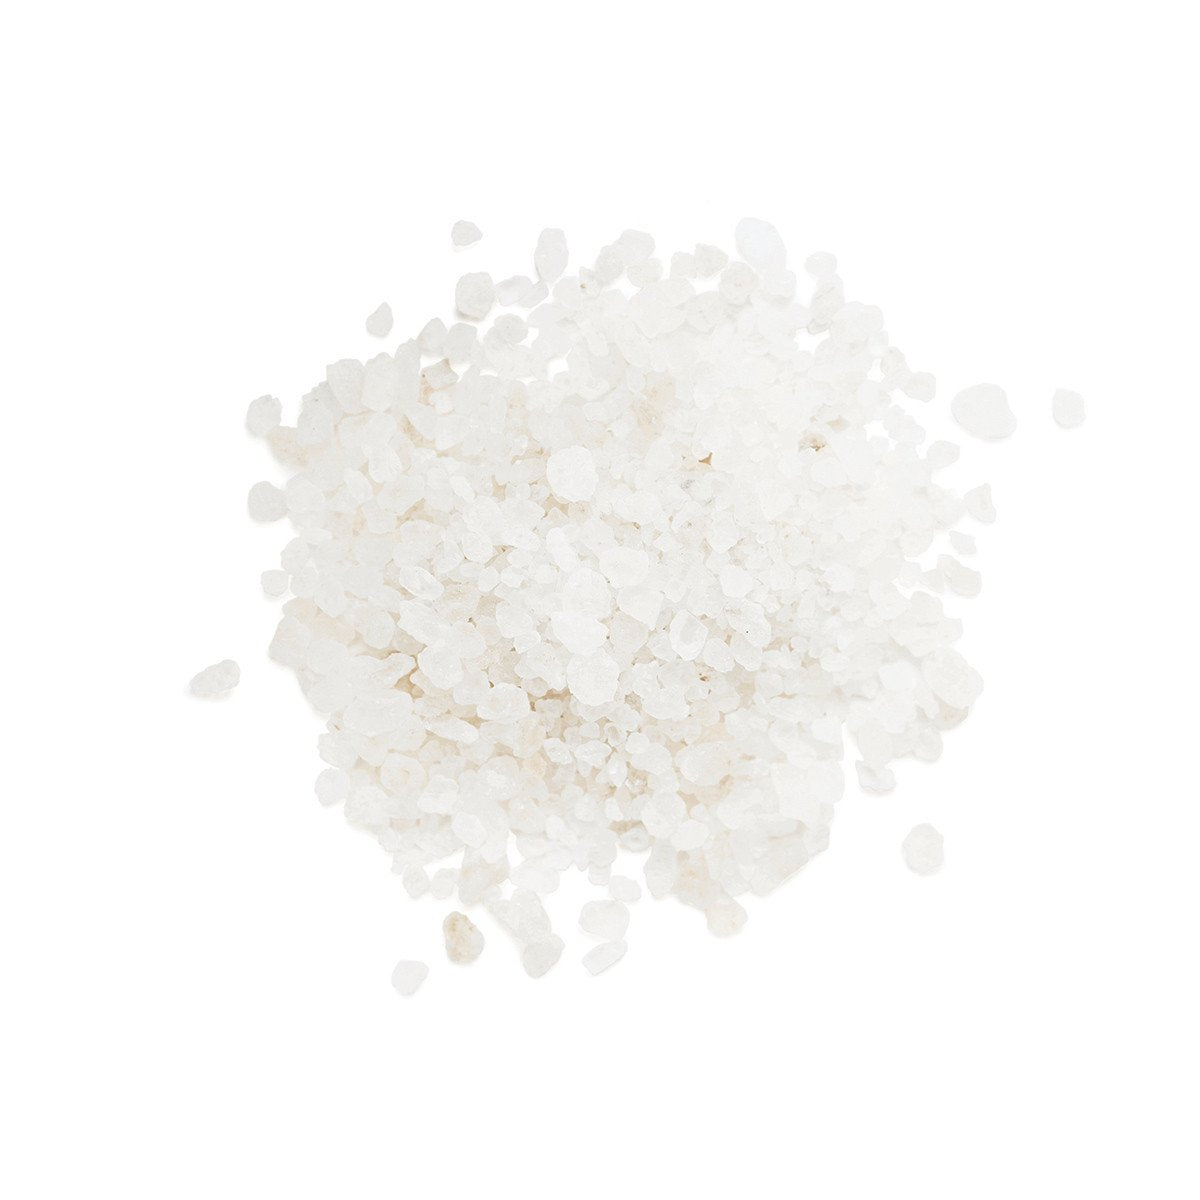 Cape Cod Sea Salt flavors